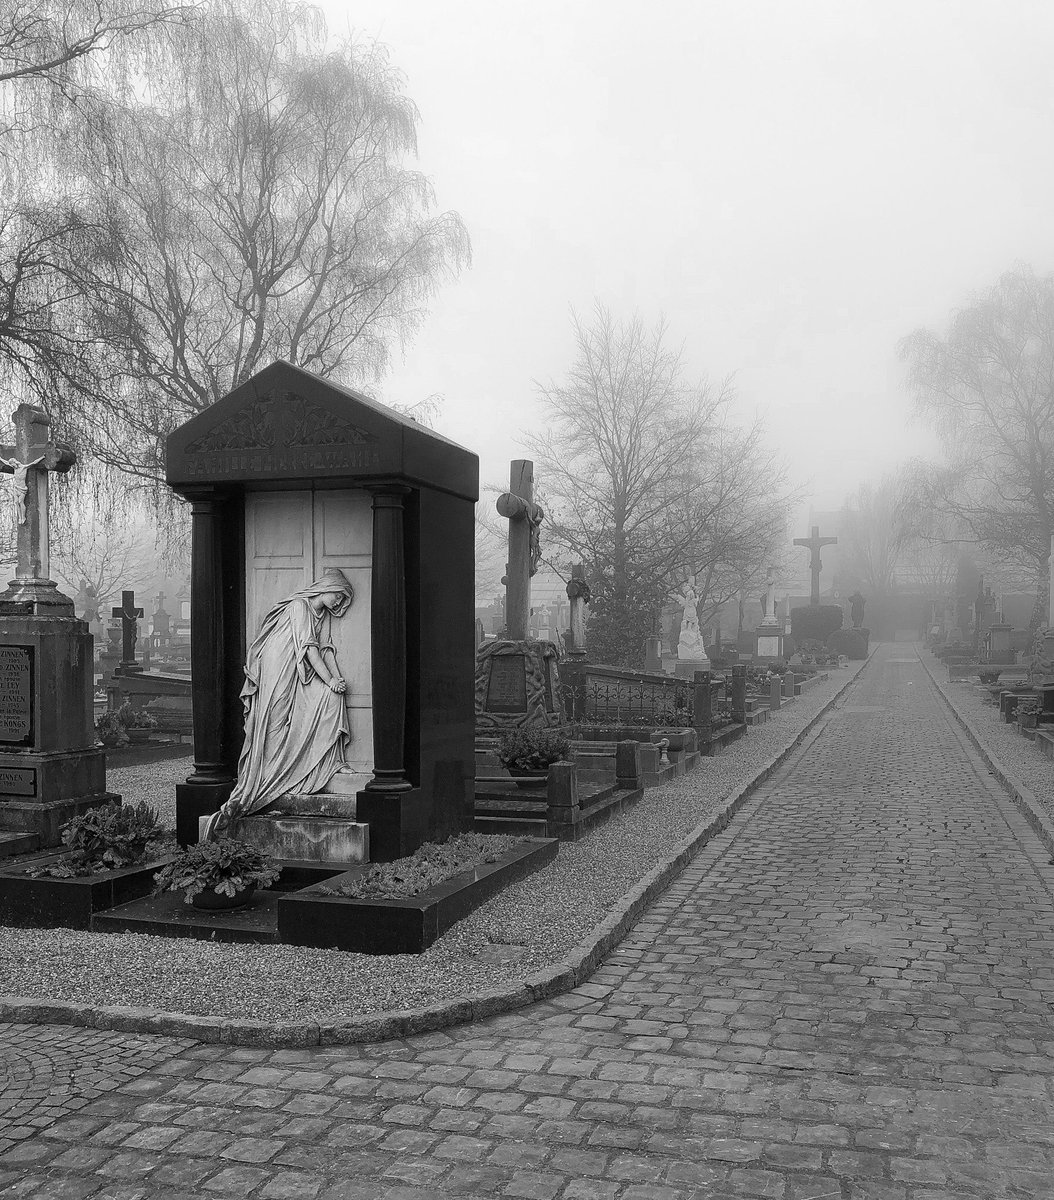 #cemeteryphotography #zwartwit #blackandwhitephotography #grading 
#cemetery #cemetery_shots #graveyard #graveyardphotography #bw #zw #bwstreetphotography #bwstreet #insta_bw #hobby #streetsofluxembourg